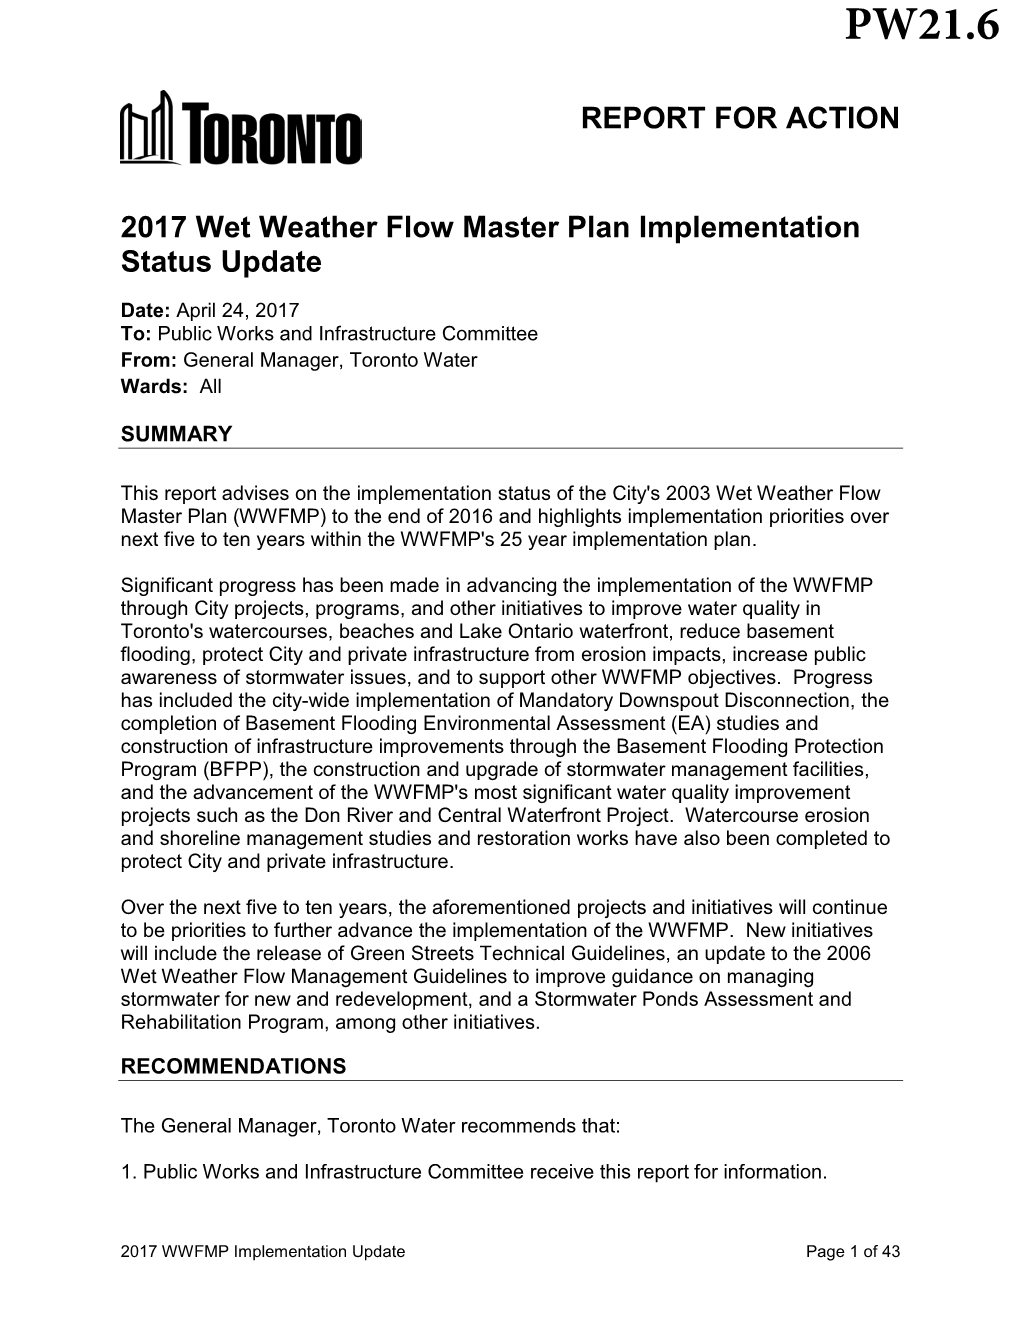 2017 Wet Weather Flow Master Plan Implementation Status Update